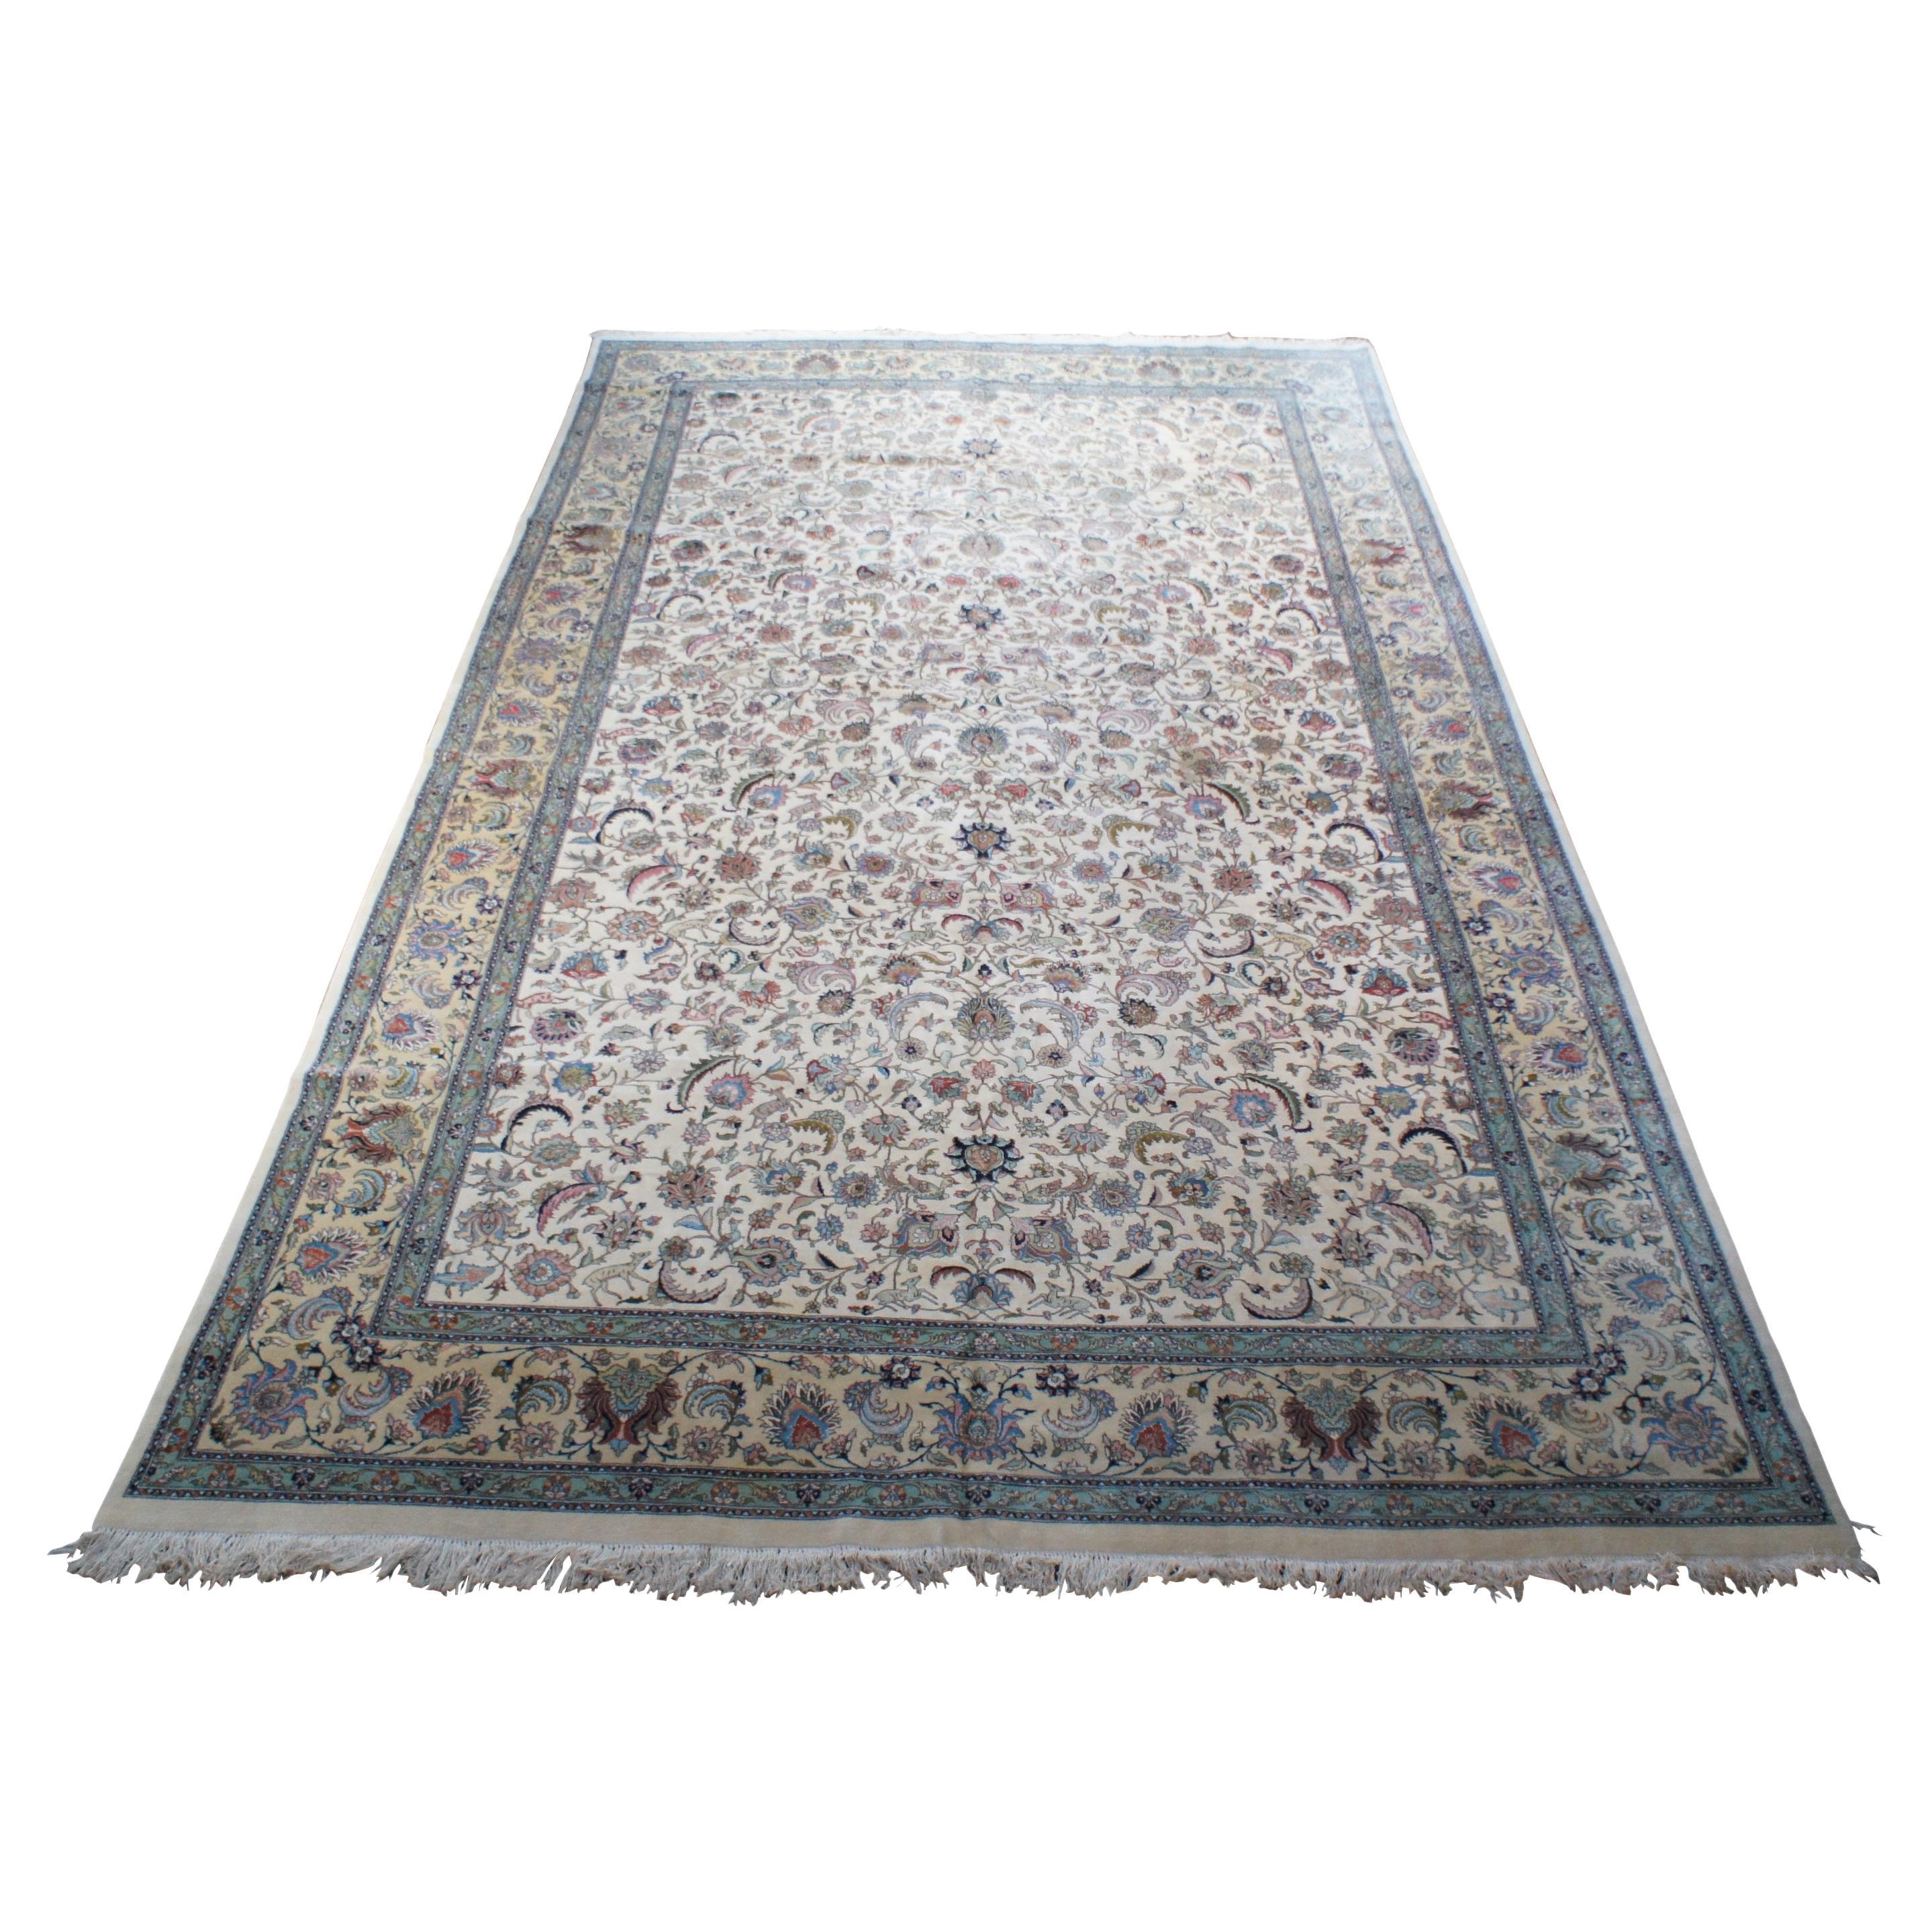 Monumental Persian Tabriz Wool Animal Bird Design Area Rug Carpet 12' x 19' For Sale